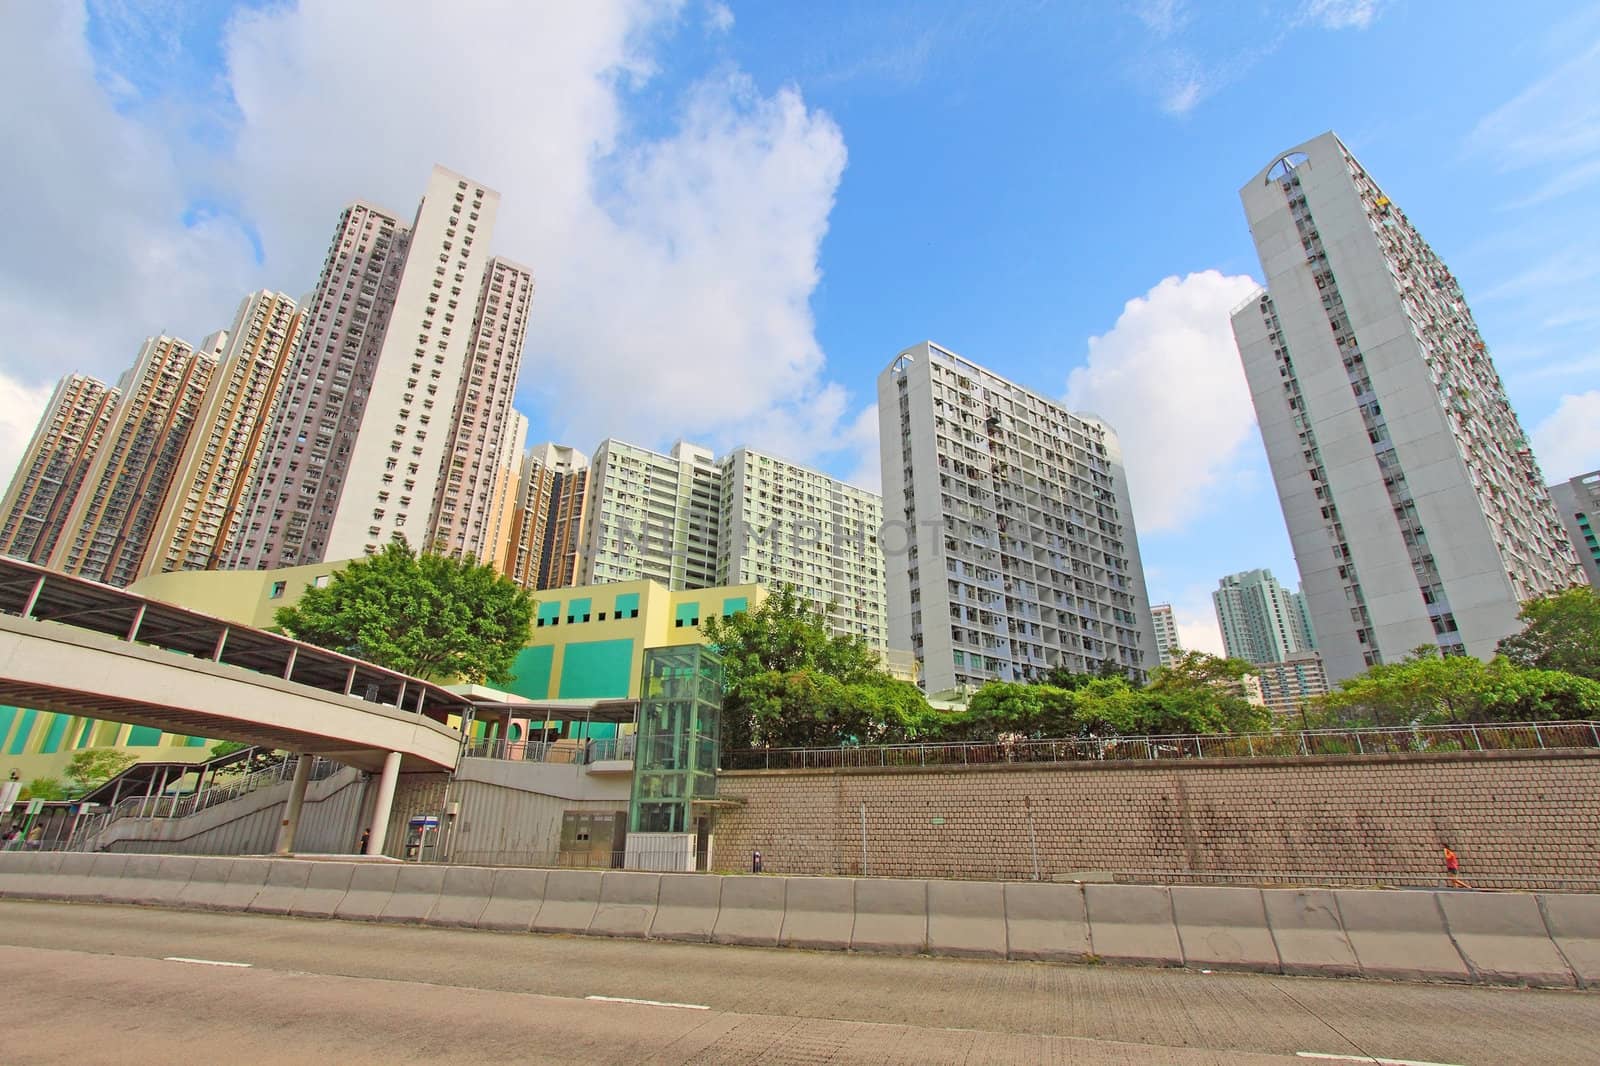 Hong Kong downtown and public housing by kawing921